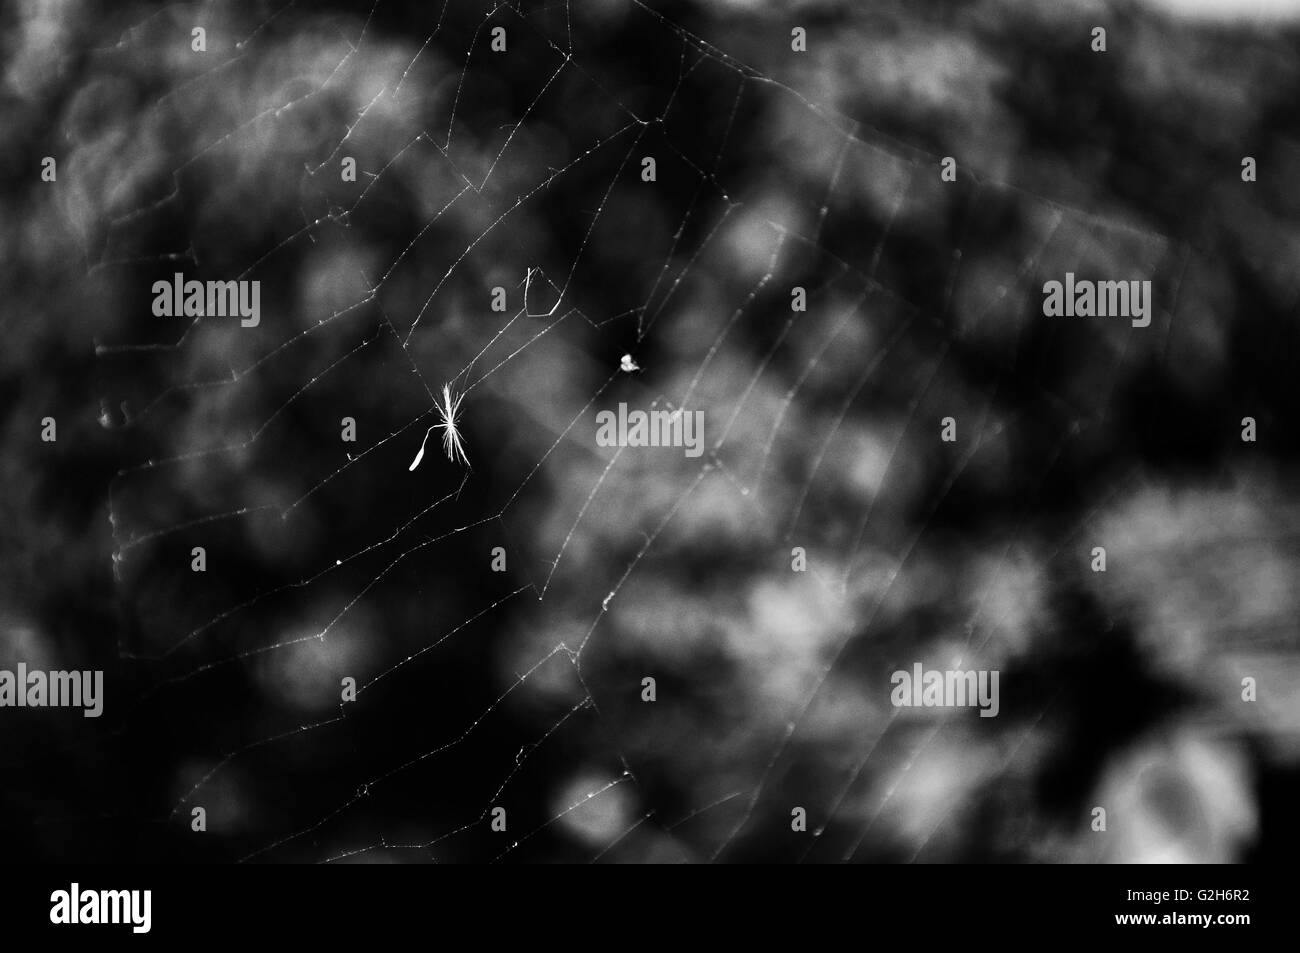 Little dandelion on cobweb in black and white photo Stock Photo